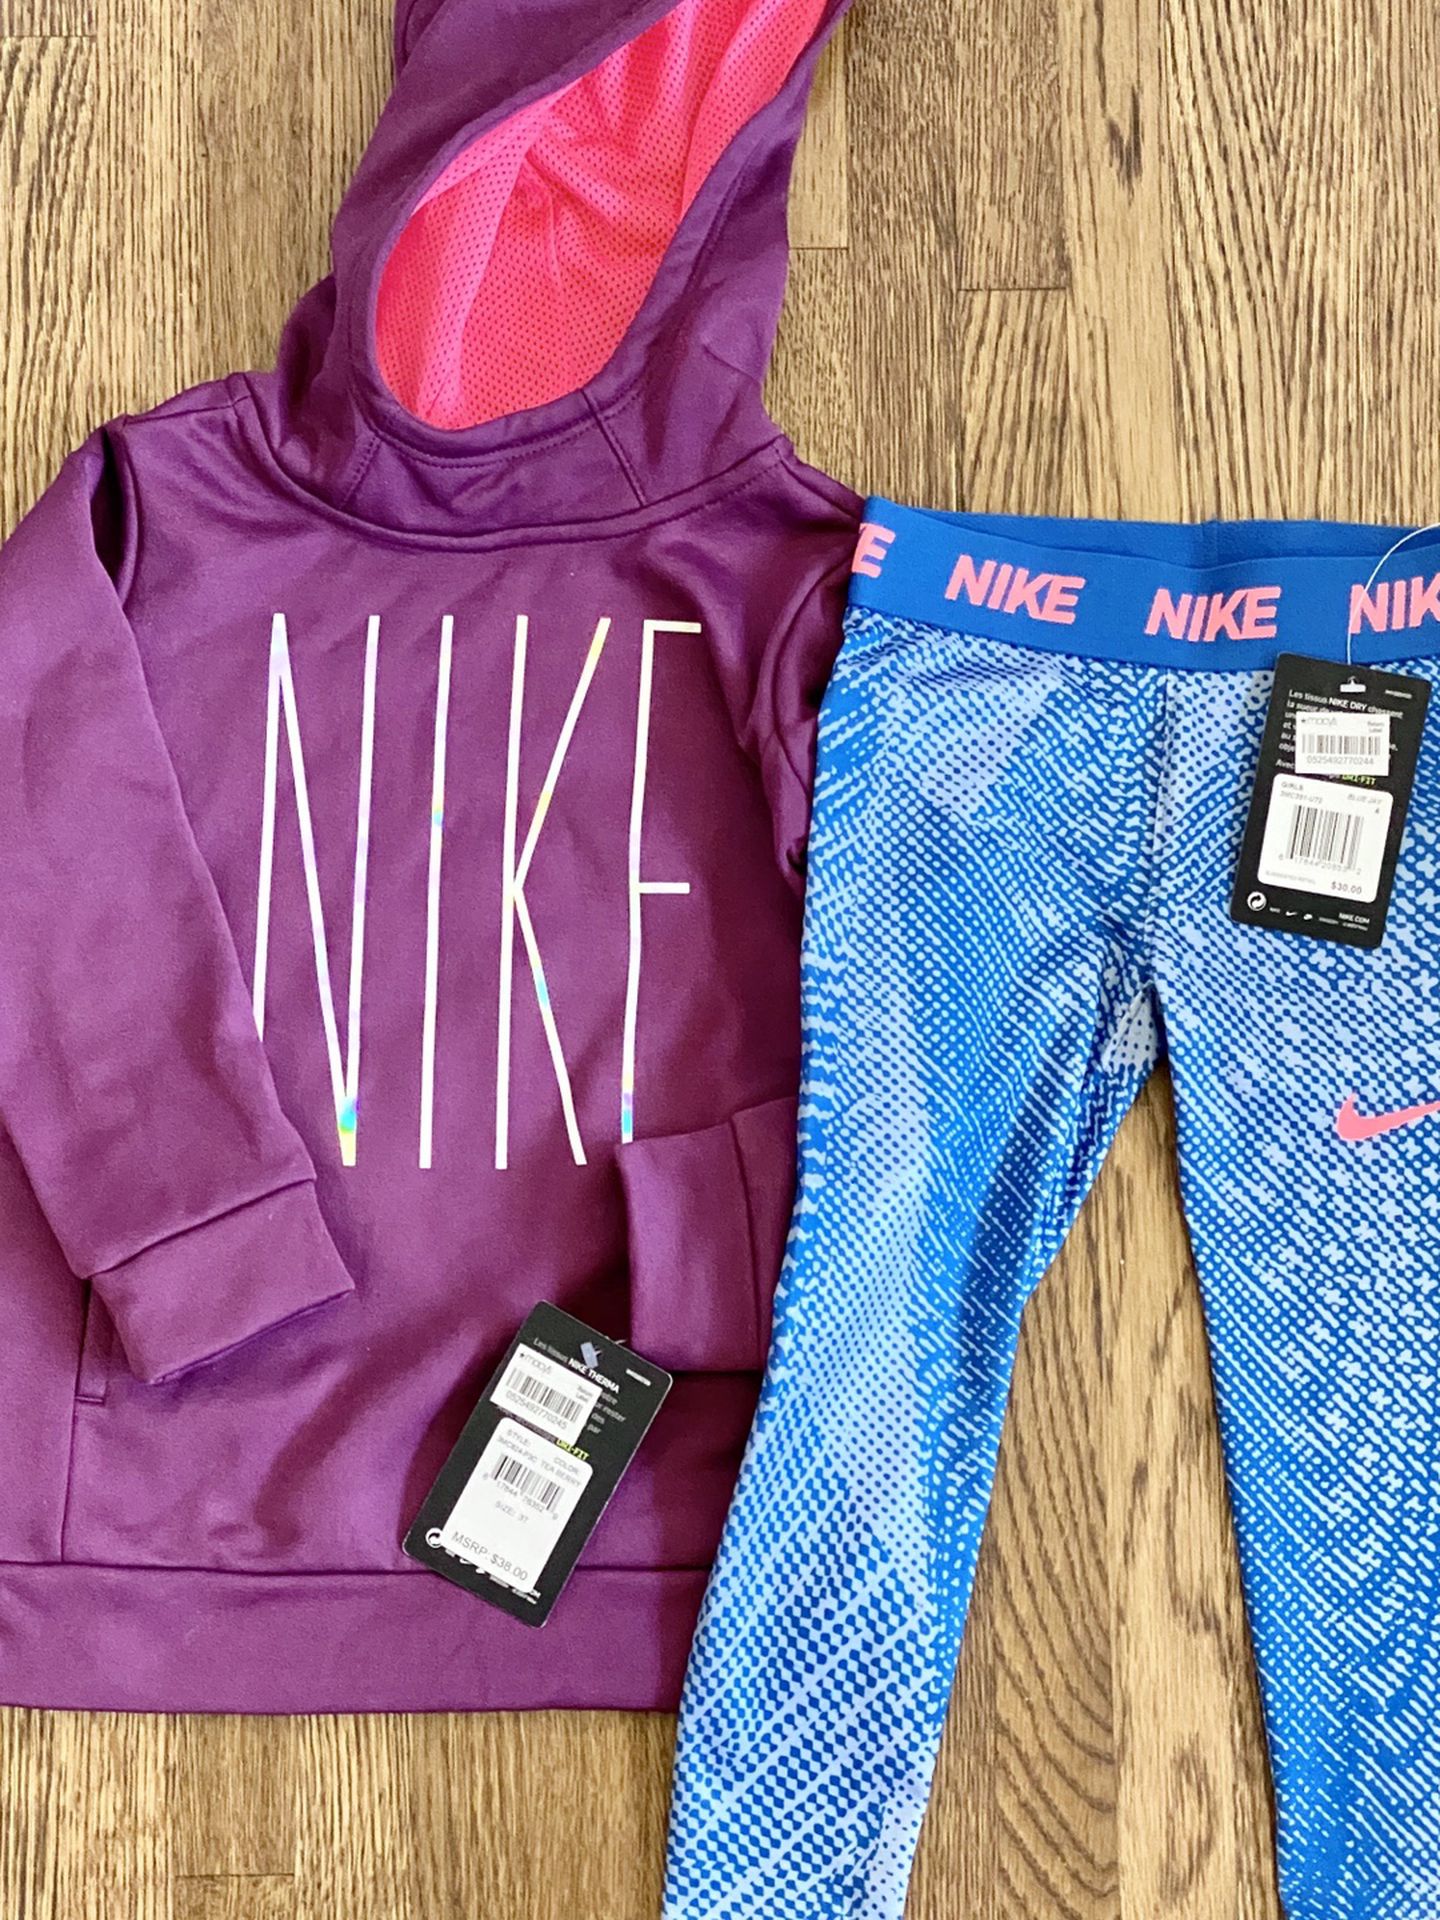 NWT- Nike Hooded Sweatshirt and Leggings 3-4T